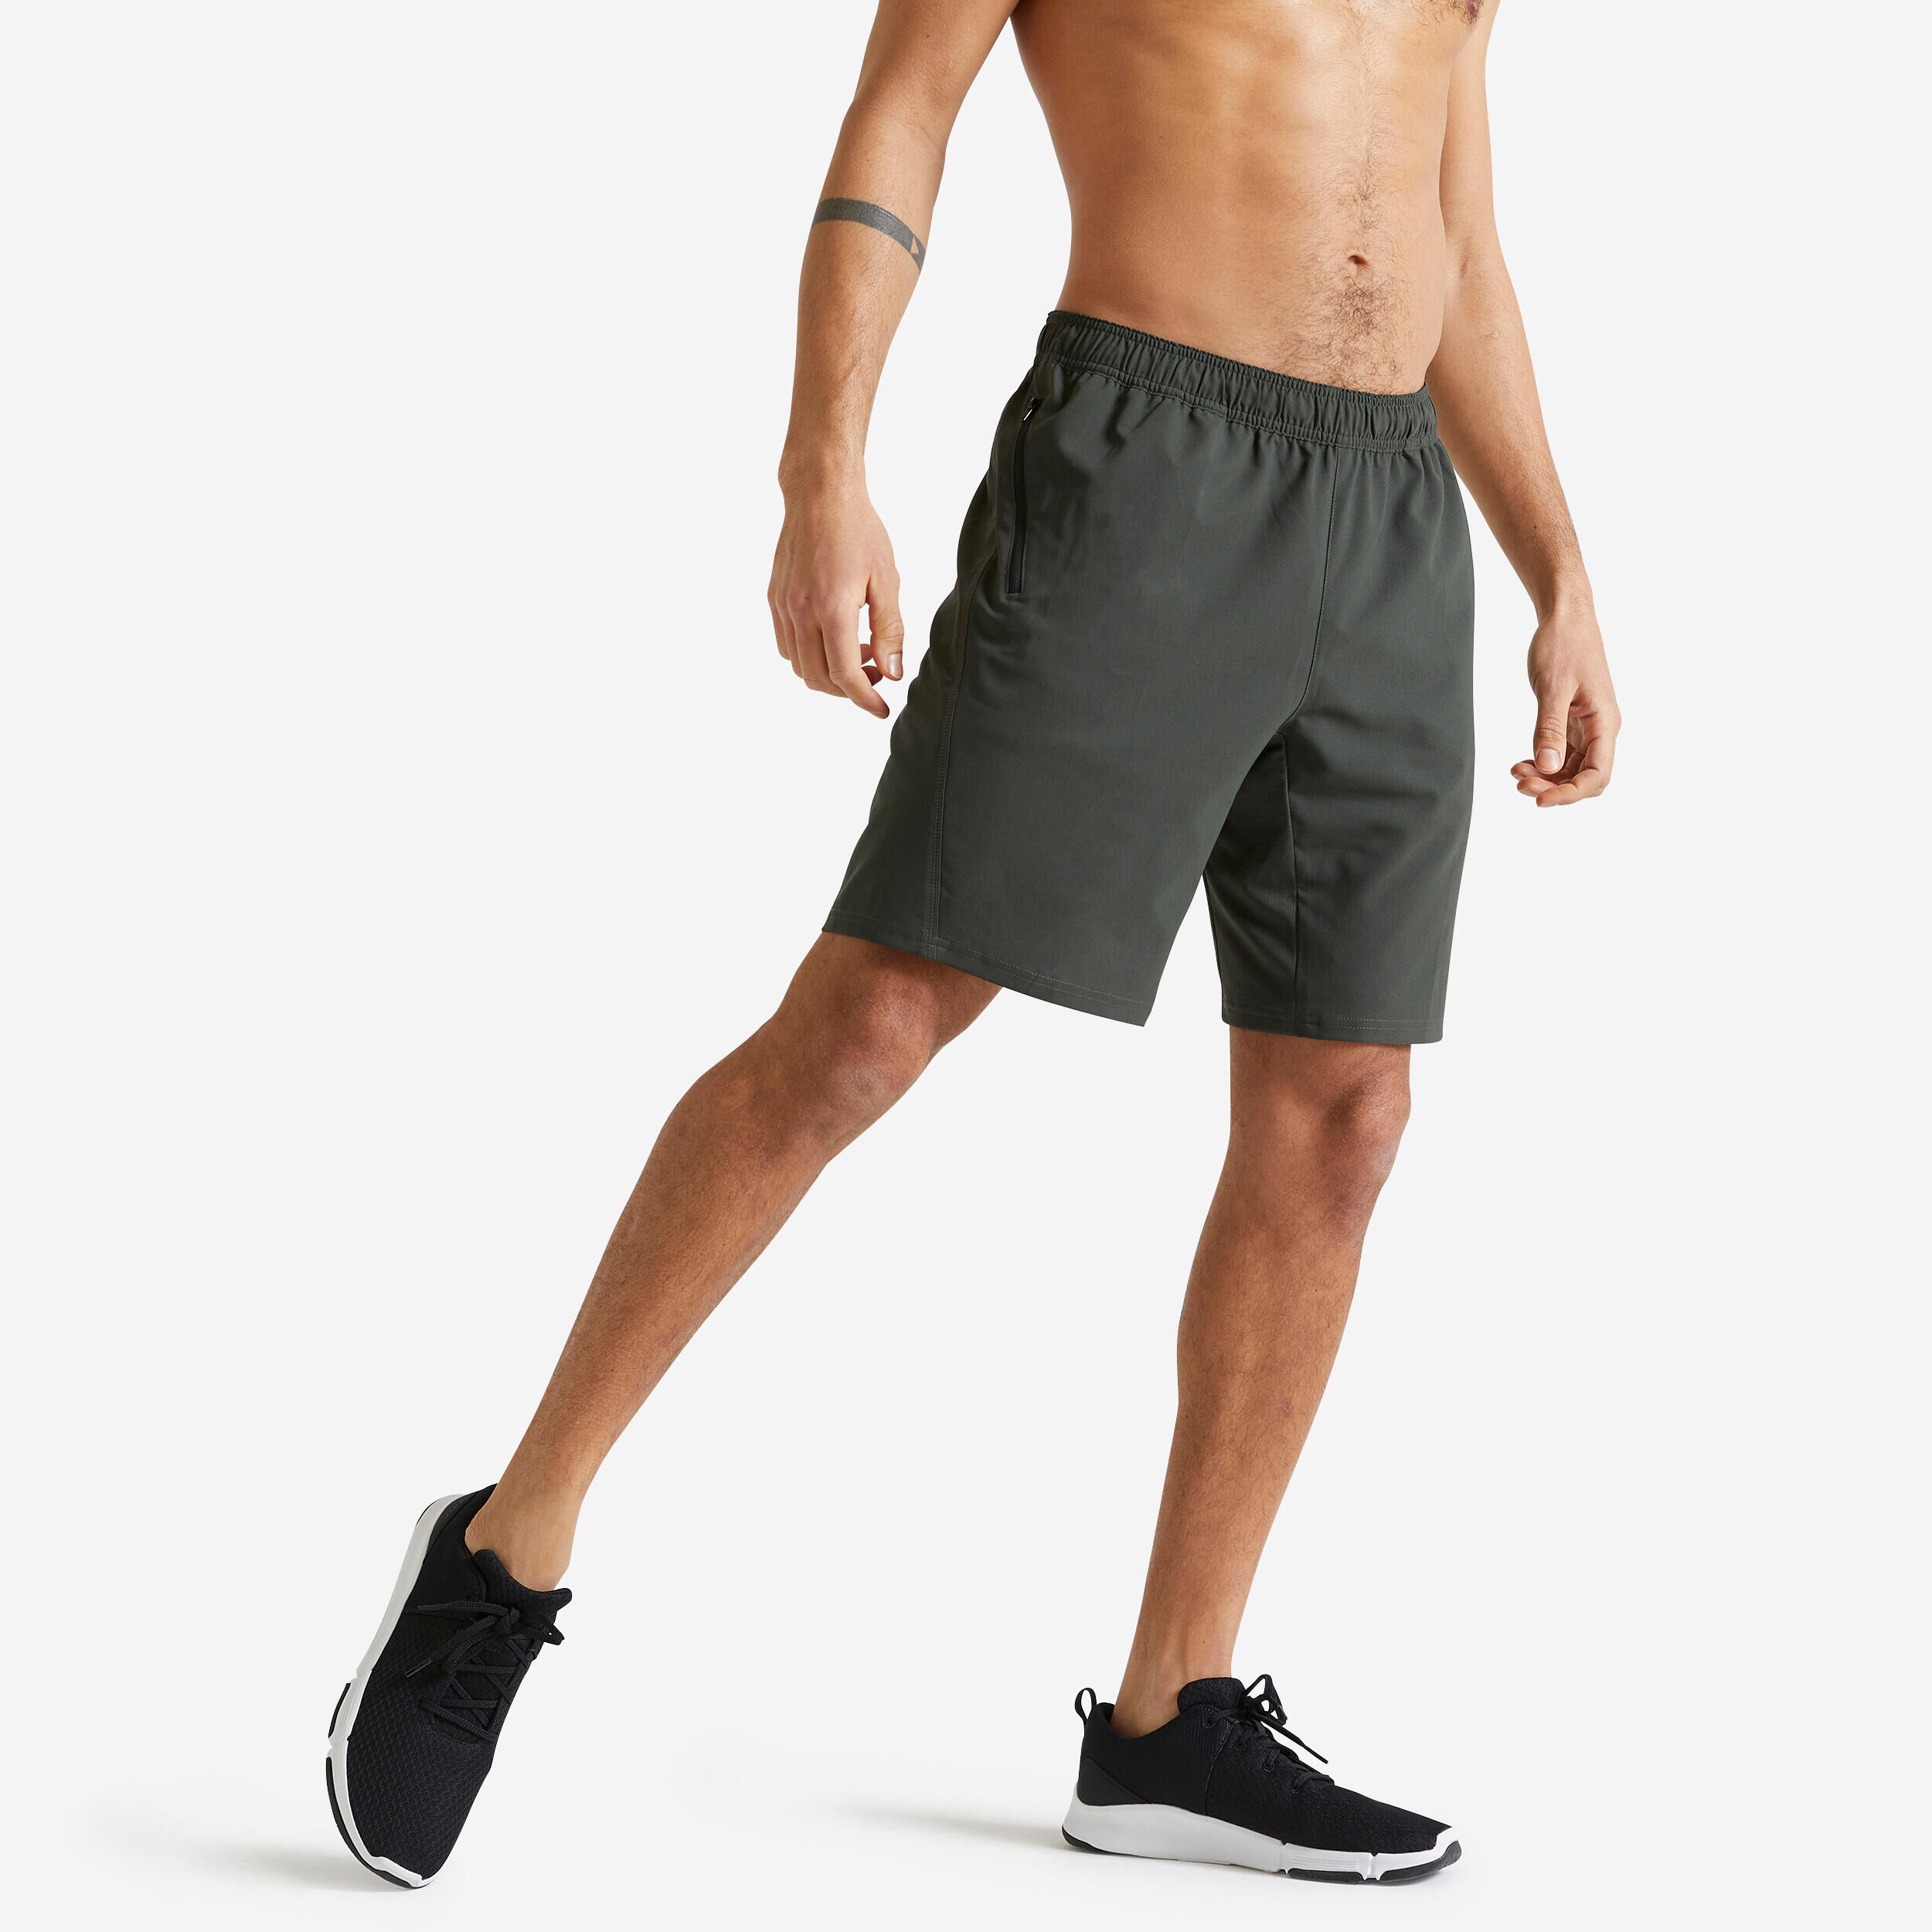 DOMYOS Men's Zip Pocket Breathable Essential Fitness Shorts - Plain Khaki